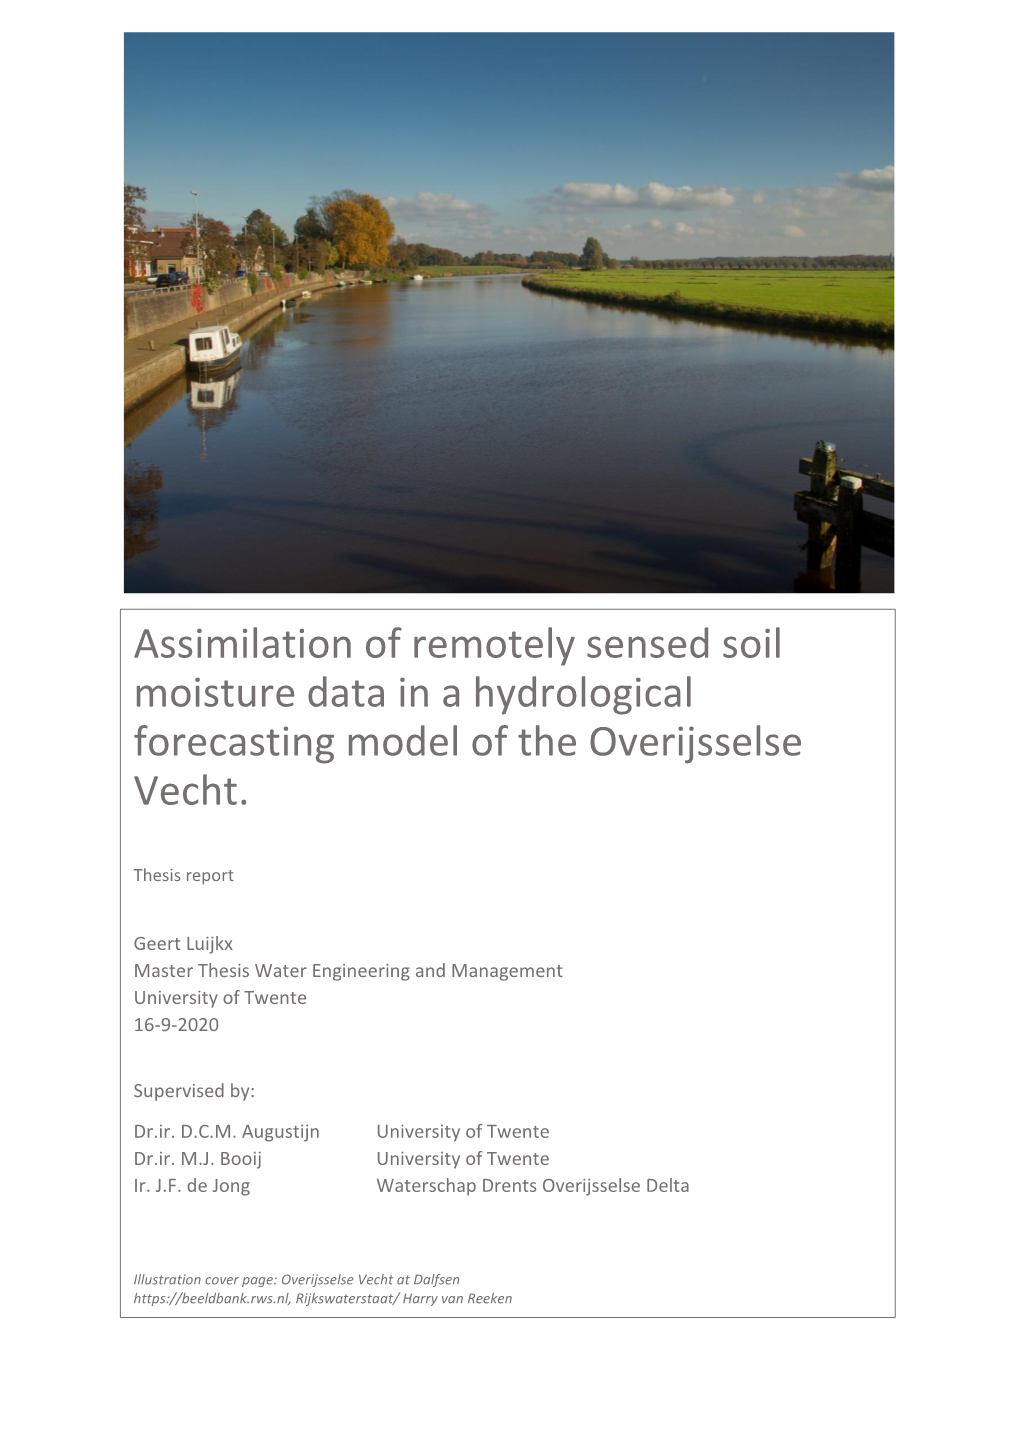 Assimilation of Remotely Sensed Soil Moisture Data in a Hydrological Forecasting Model of the Overijsselse Vecht